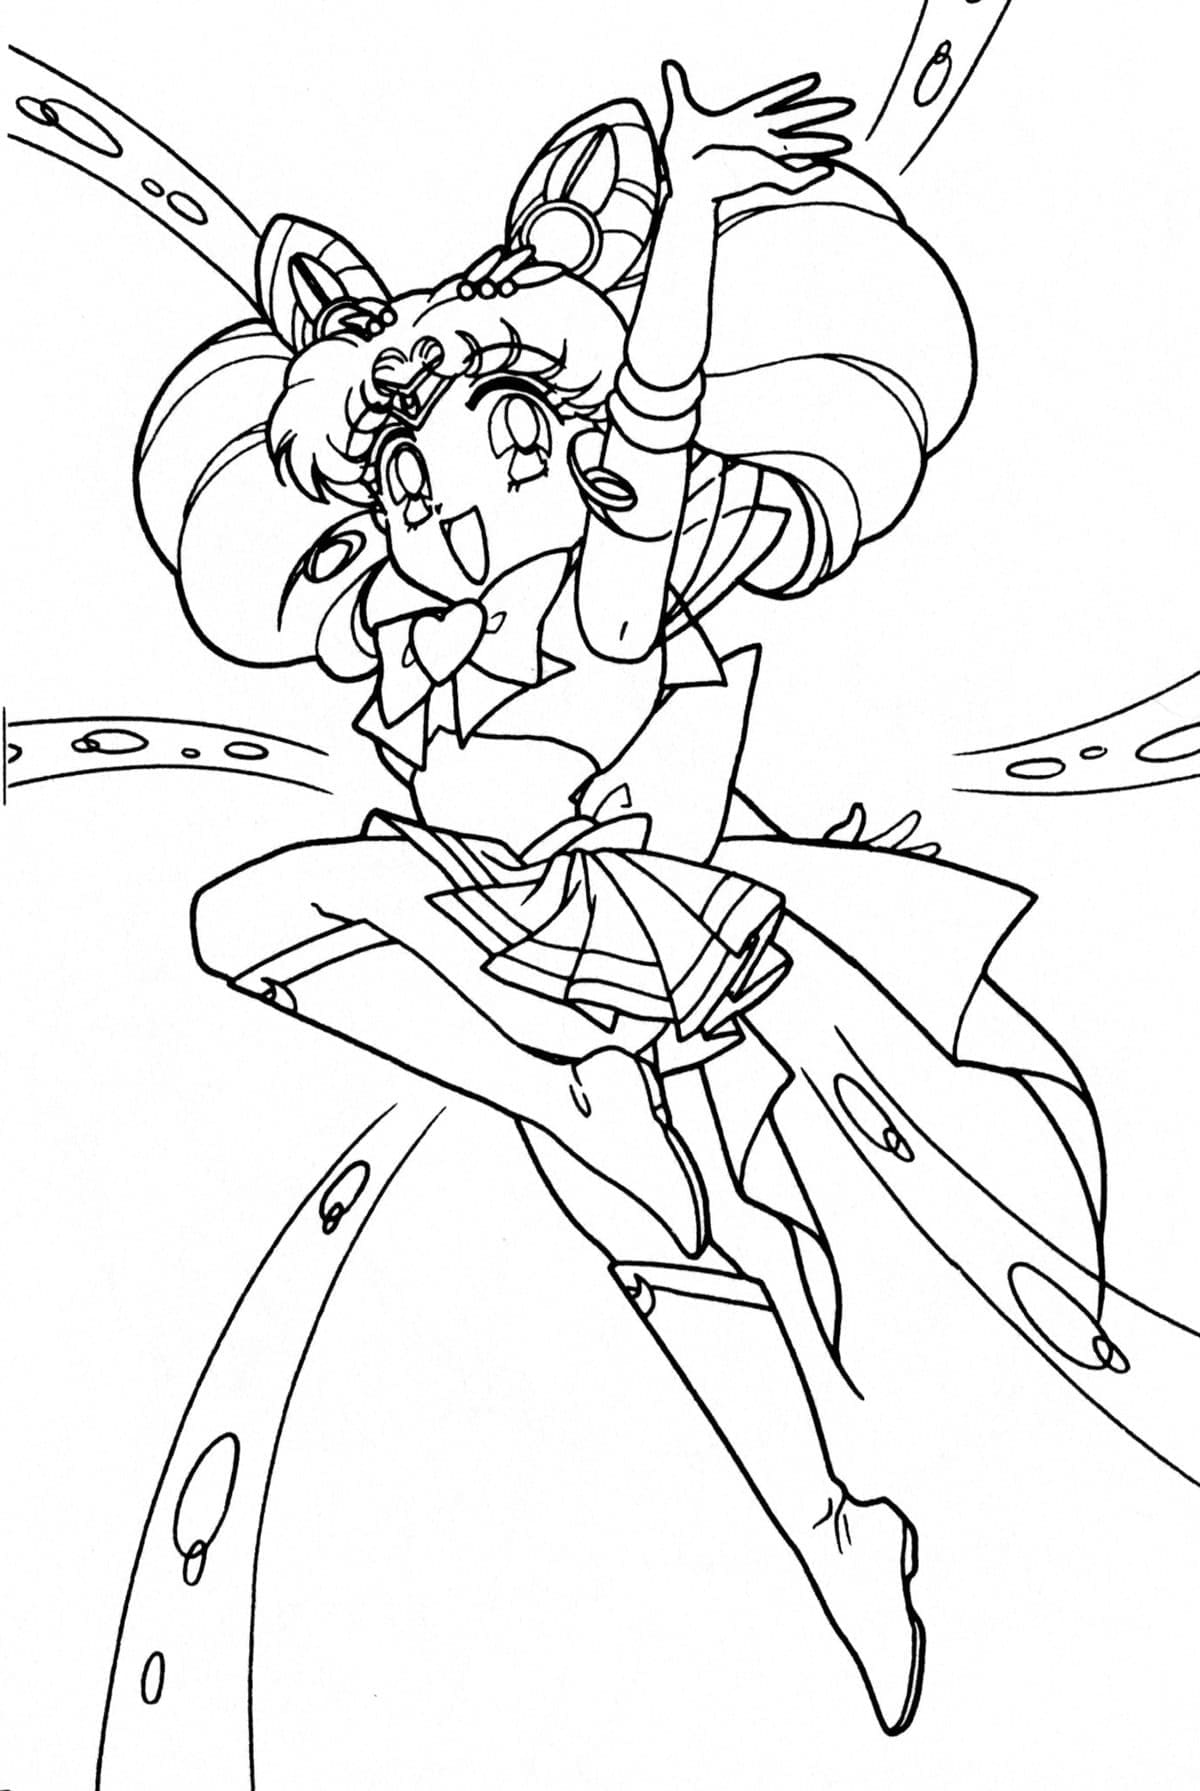 Sailor moon de colorat p01